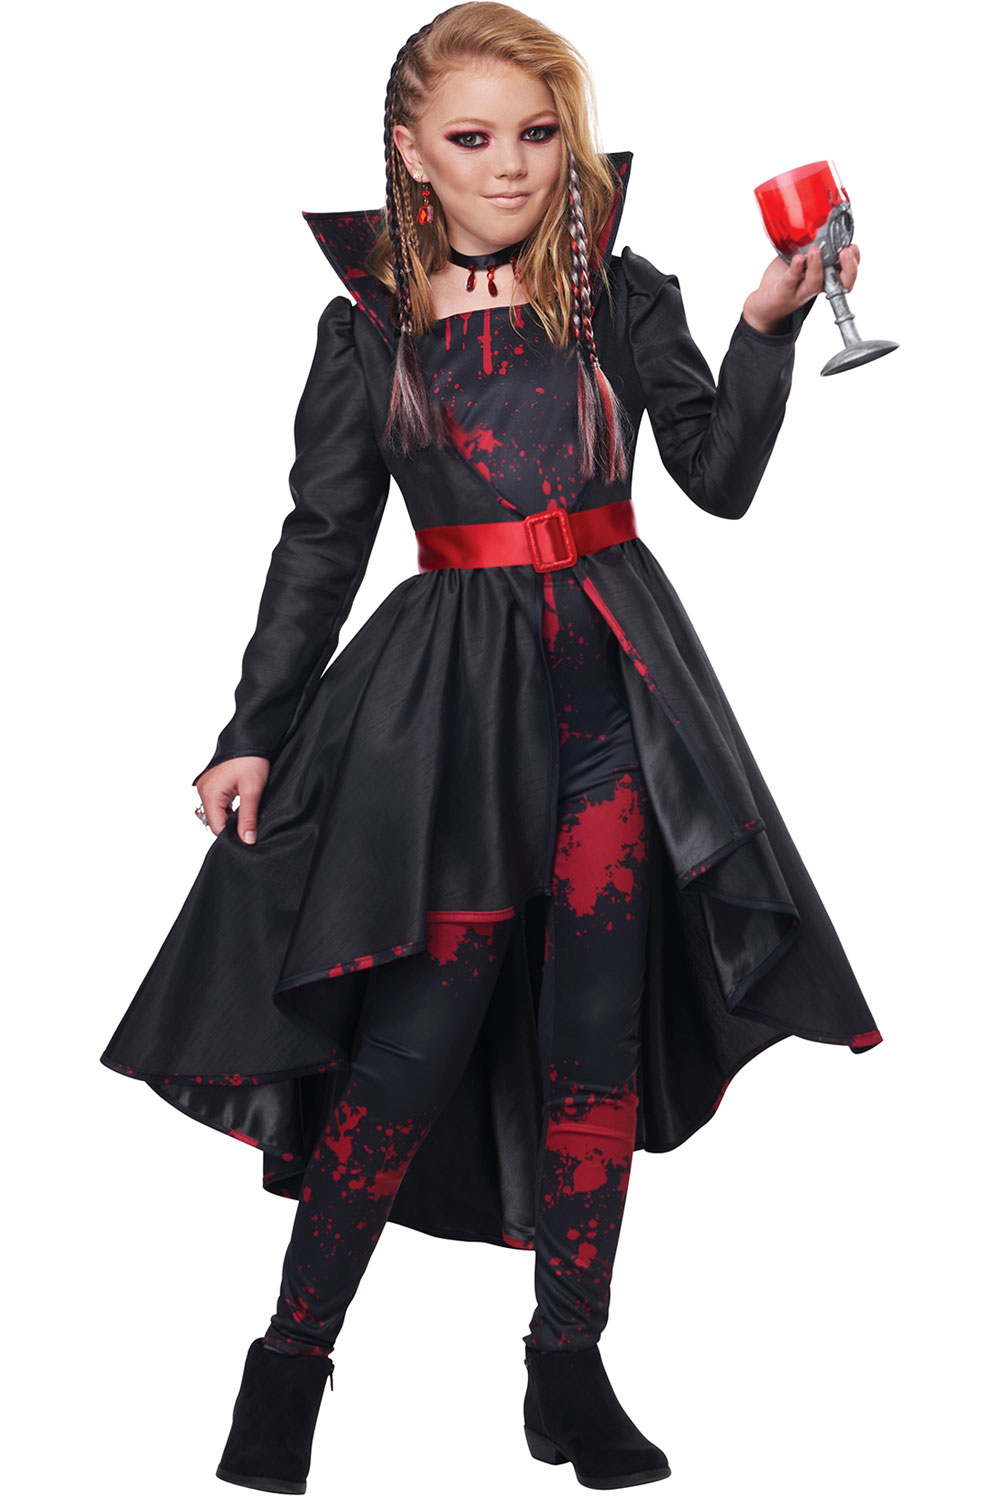 California Costume Bad Blood Child Girls Halloween Outfit Vampire 3020